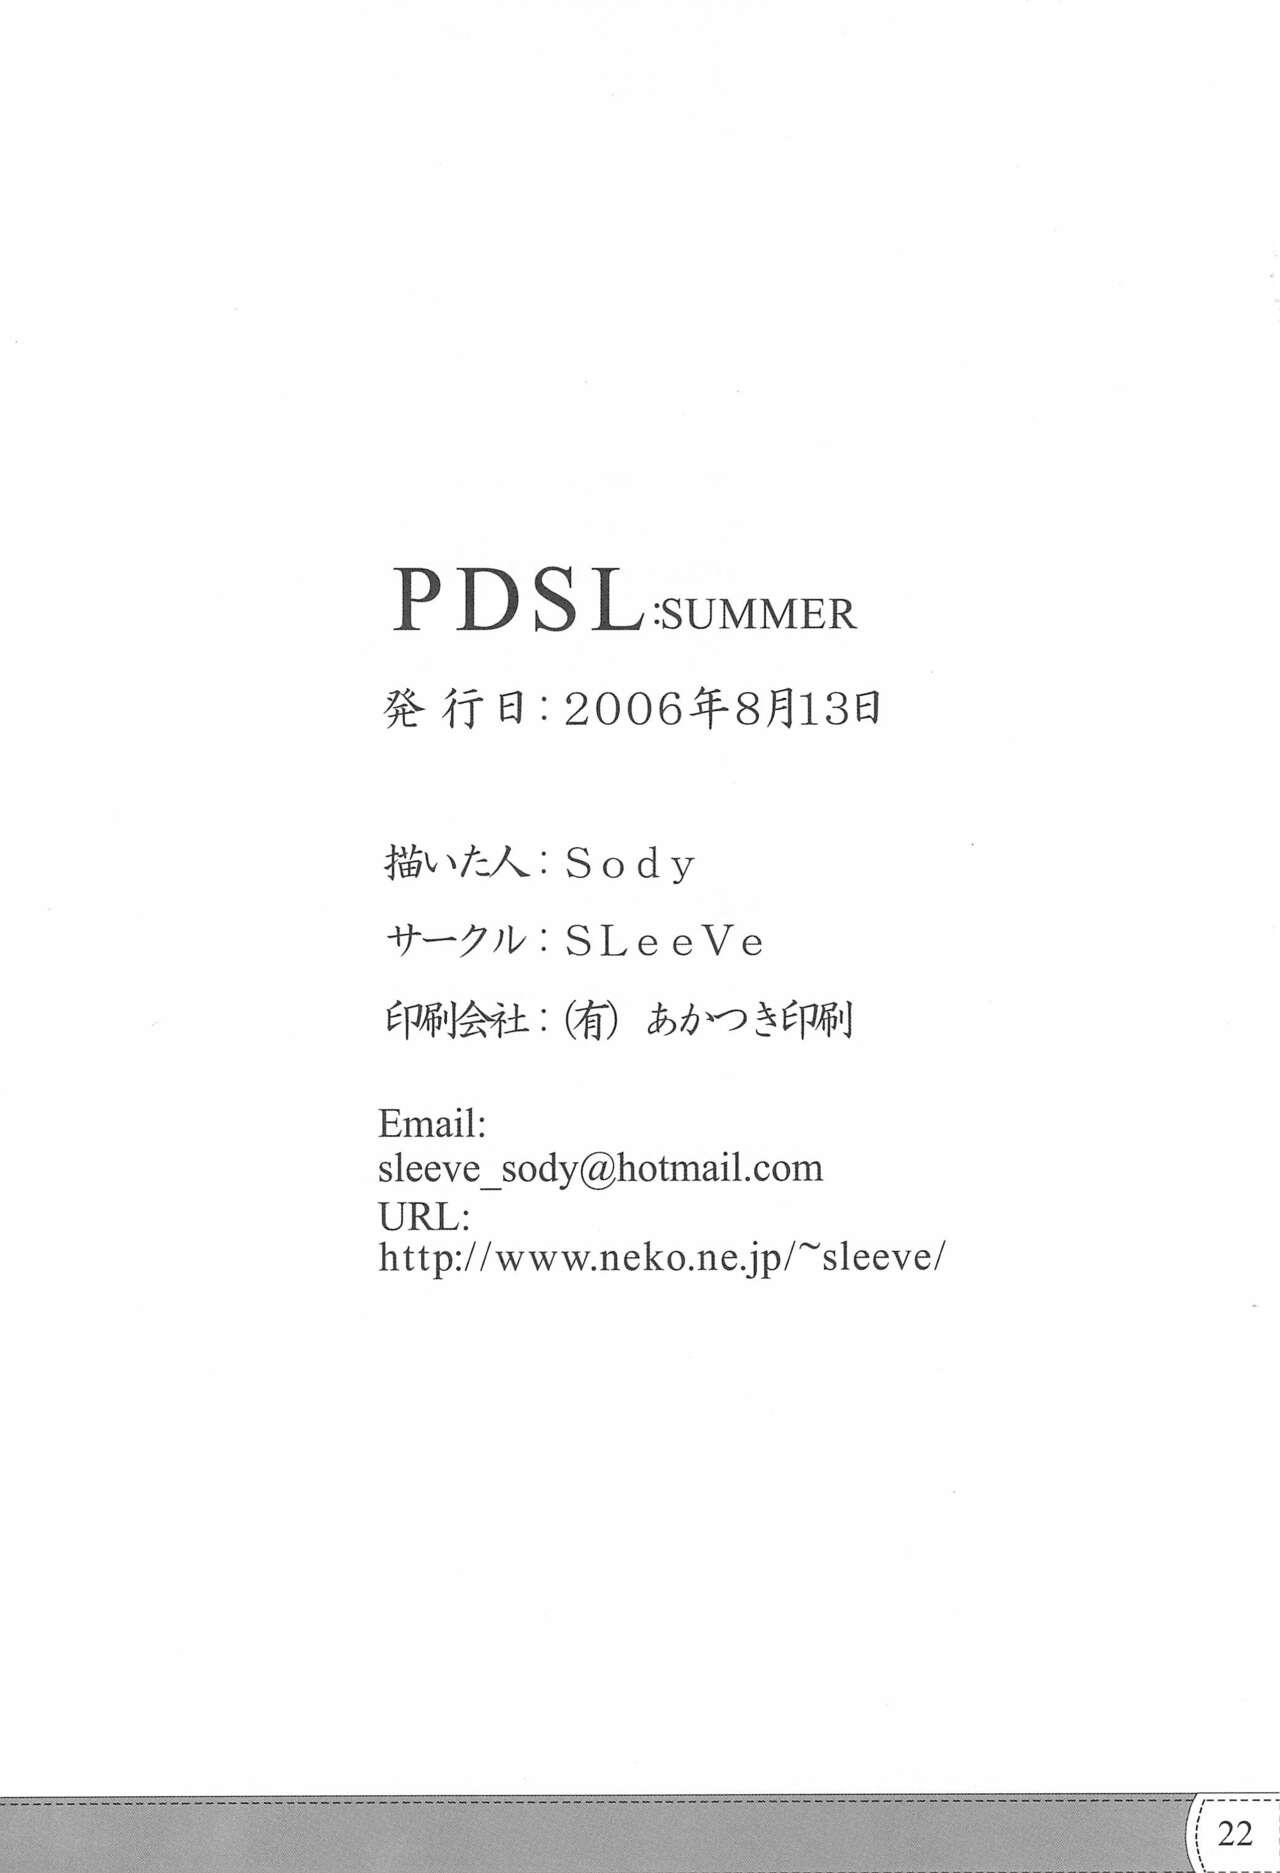 PDSL:SUMMER 23